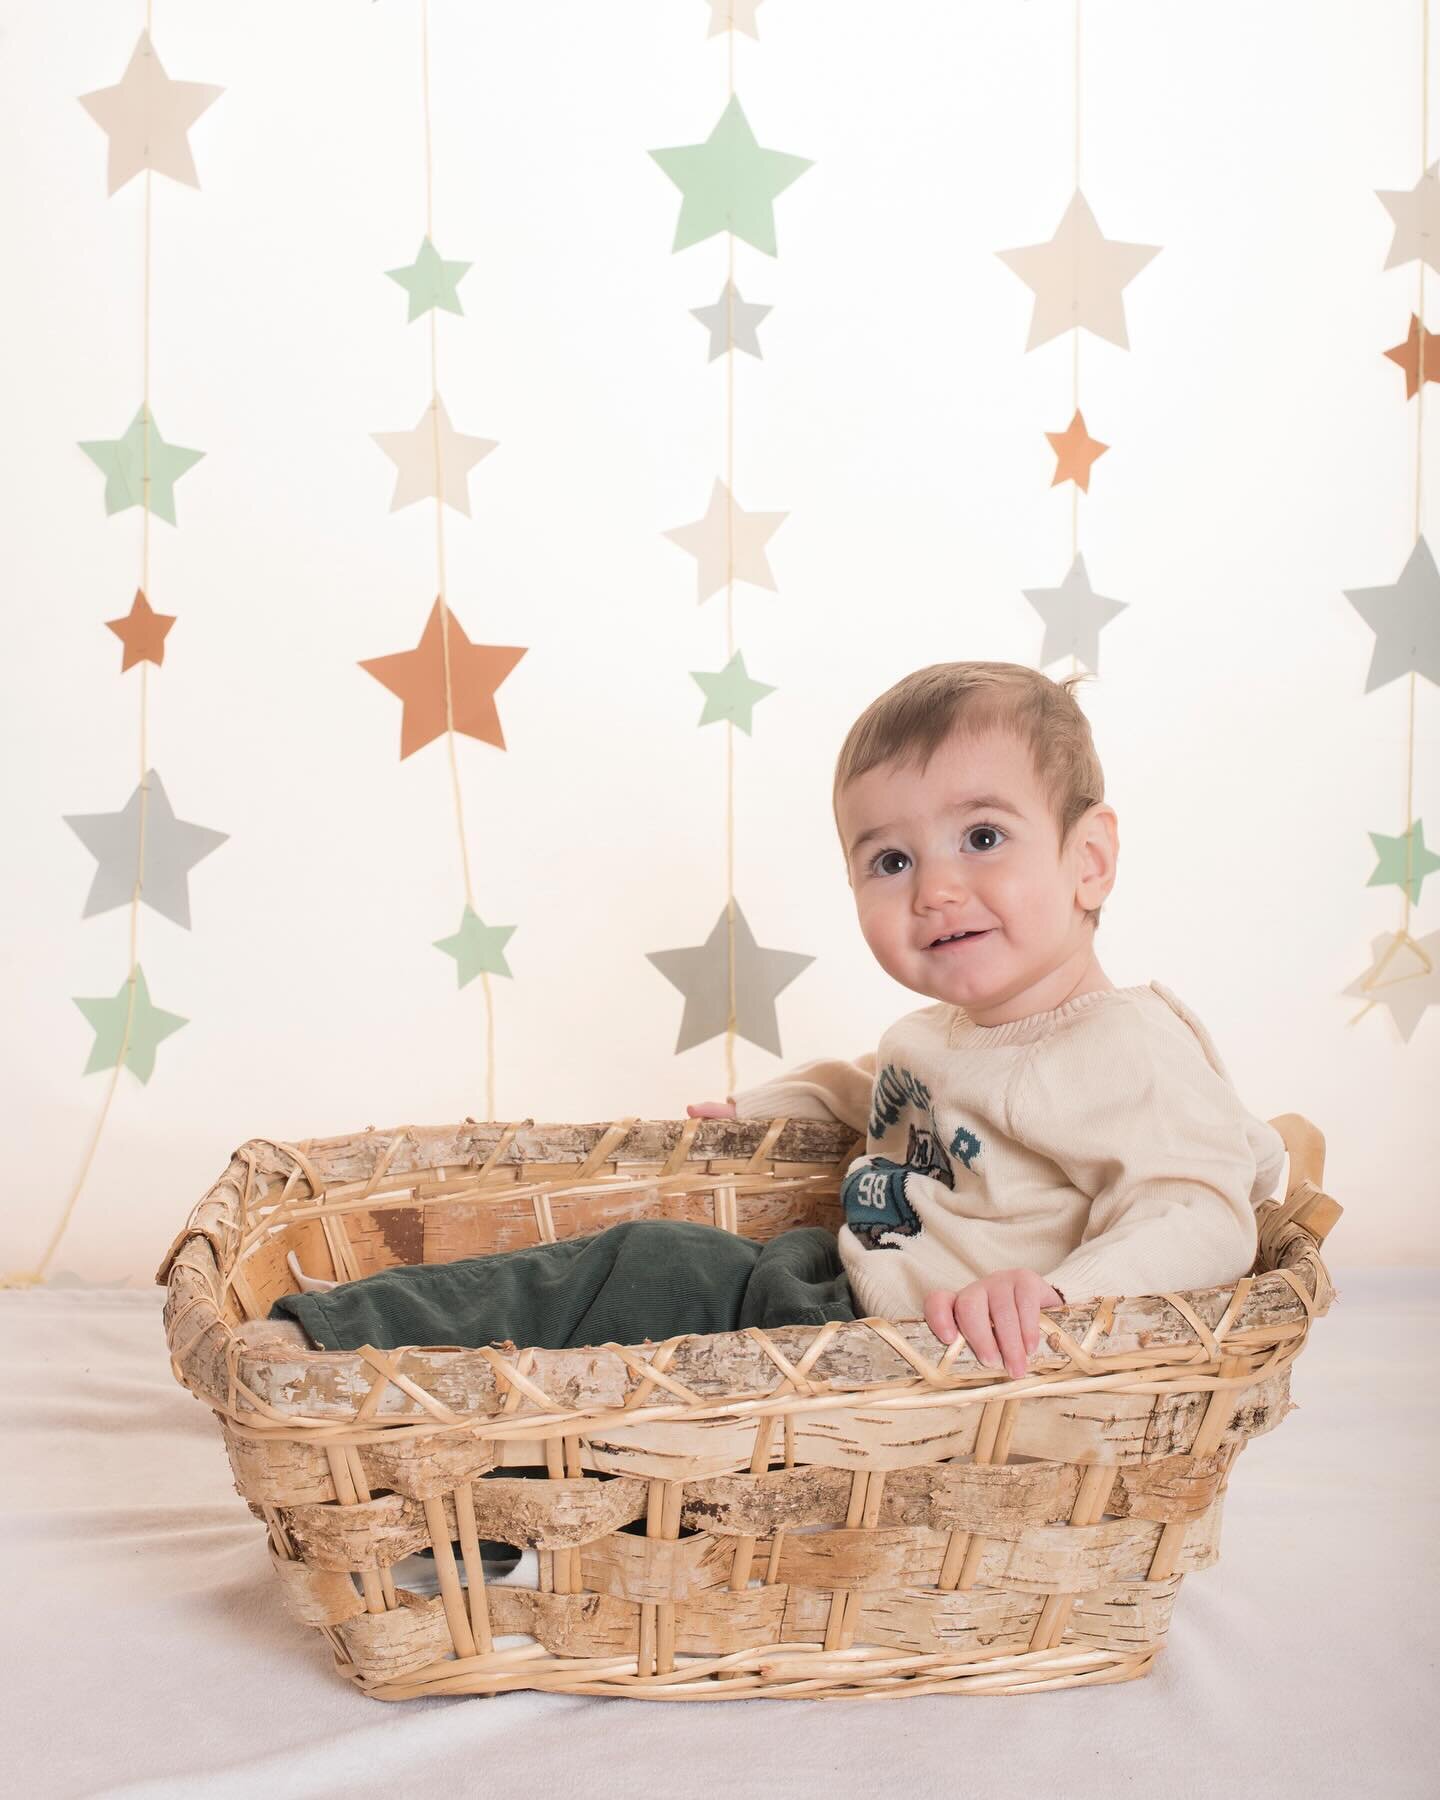 Tra le stelle ✨ #babyphotography #babyboy #familyphotography